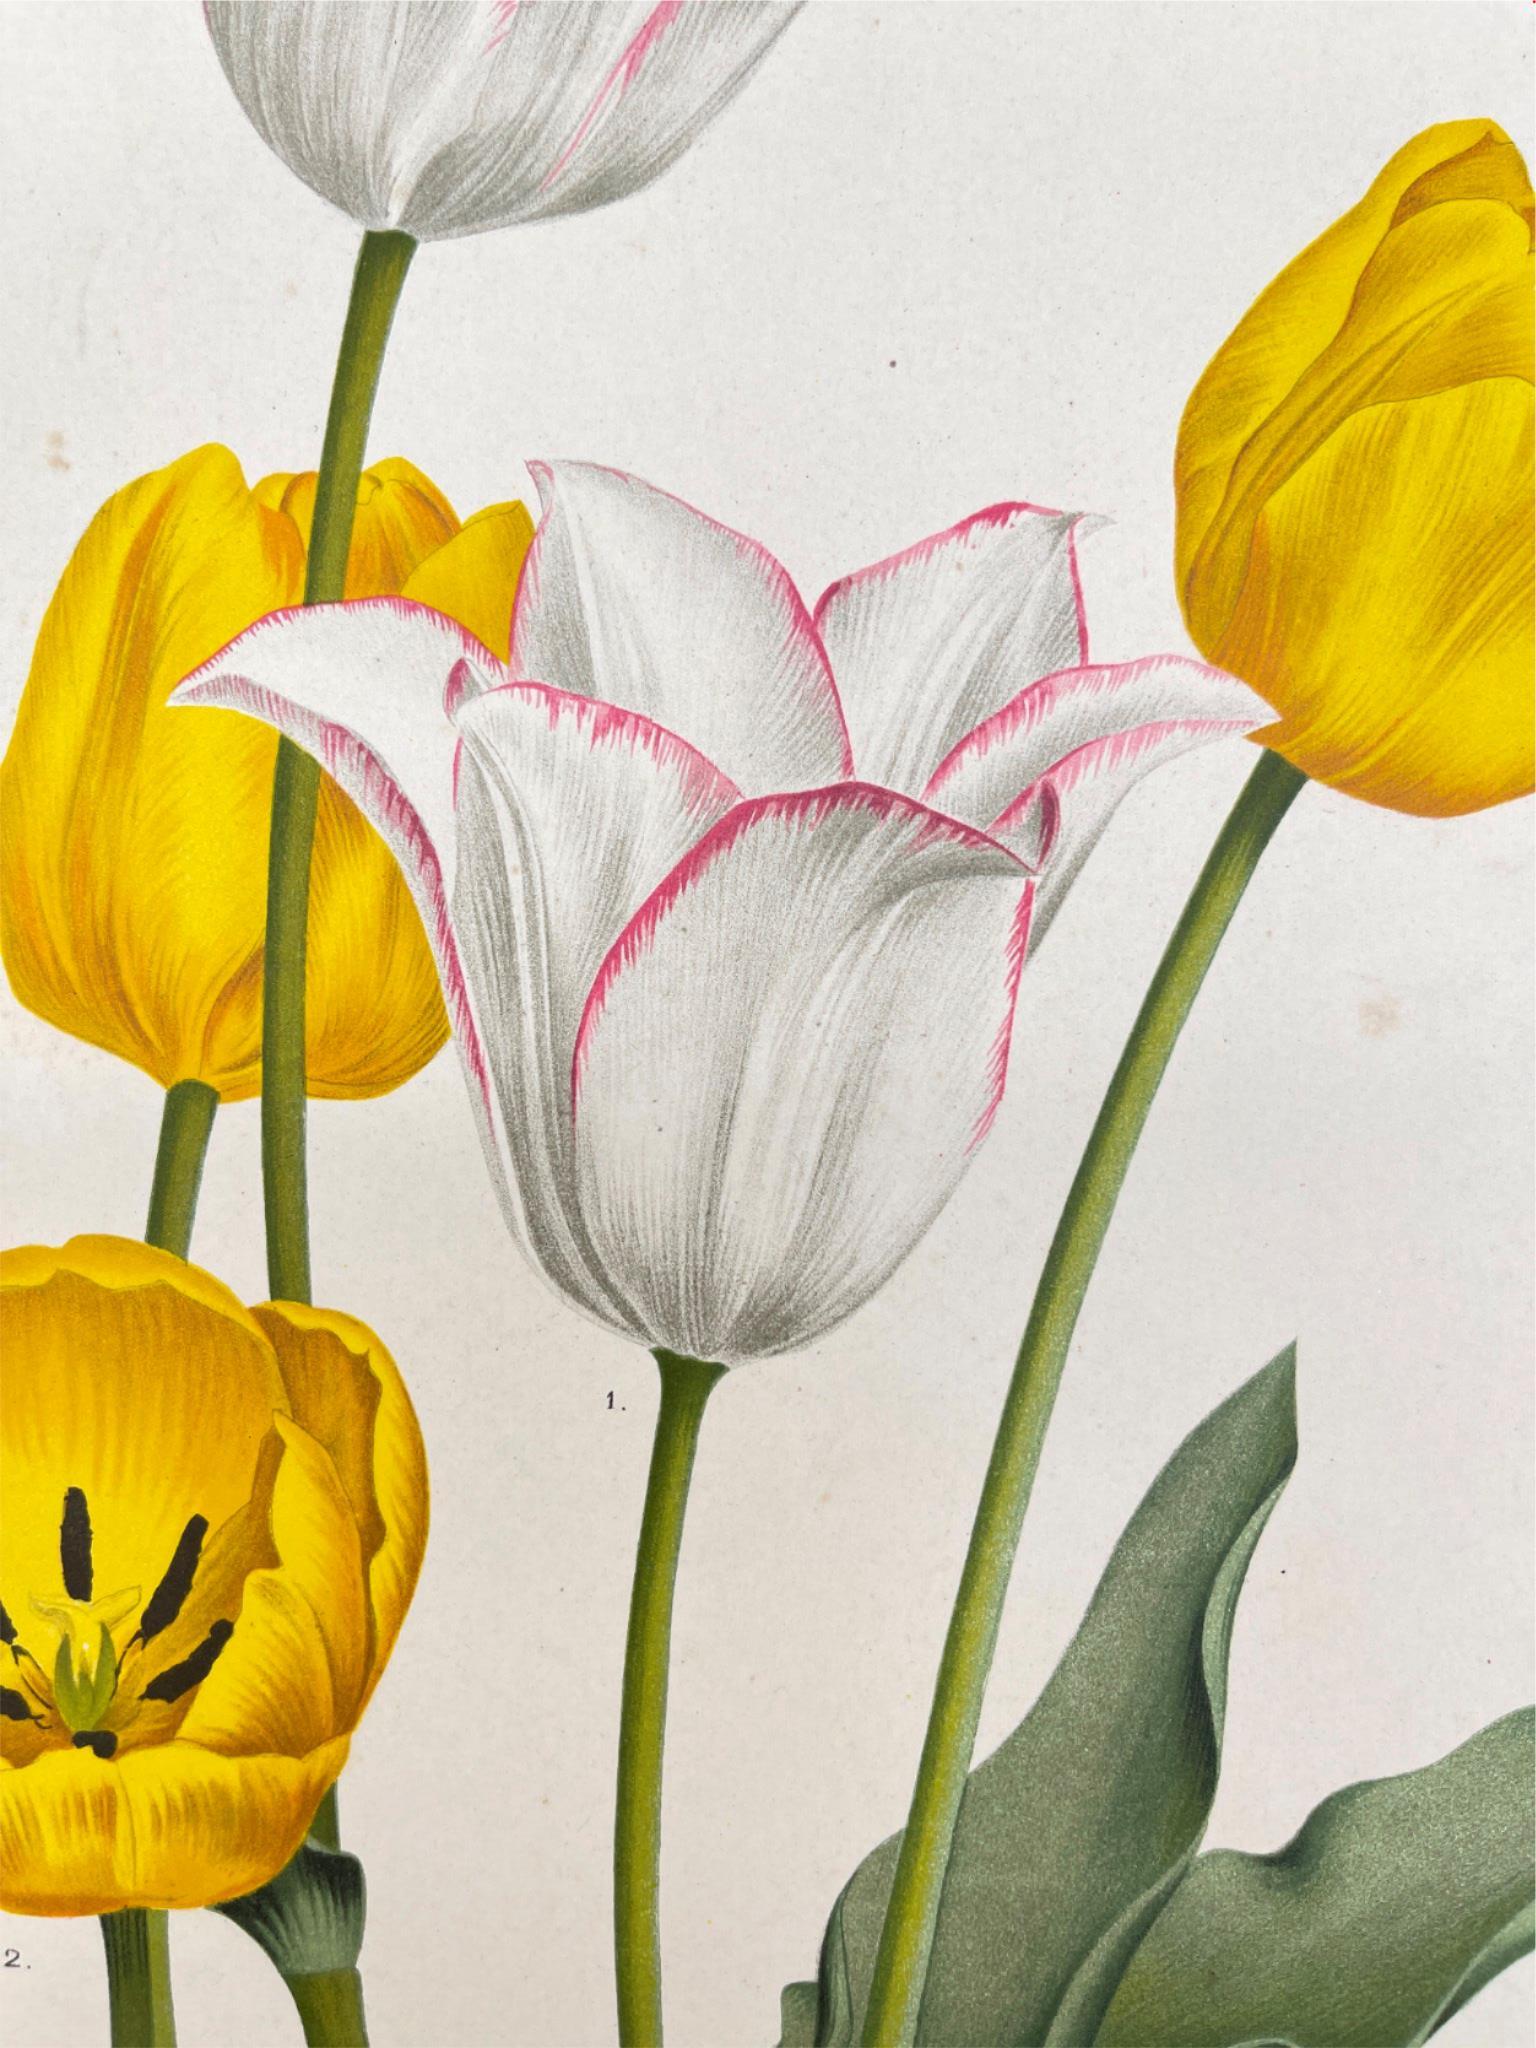 Antique Botanical Print - Flower Art - Picotee - Goffart & Severeijns - Dahlströms Fine Art